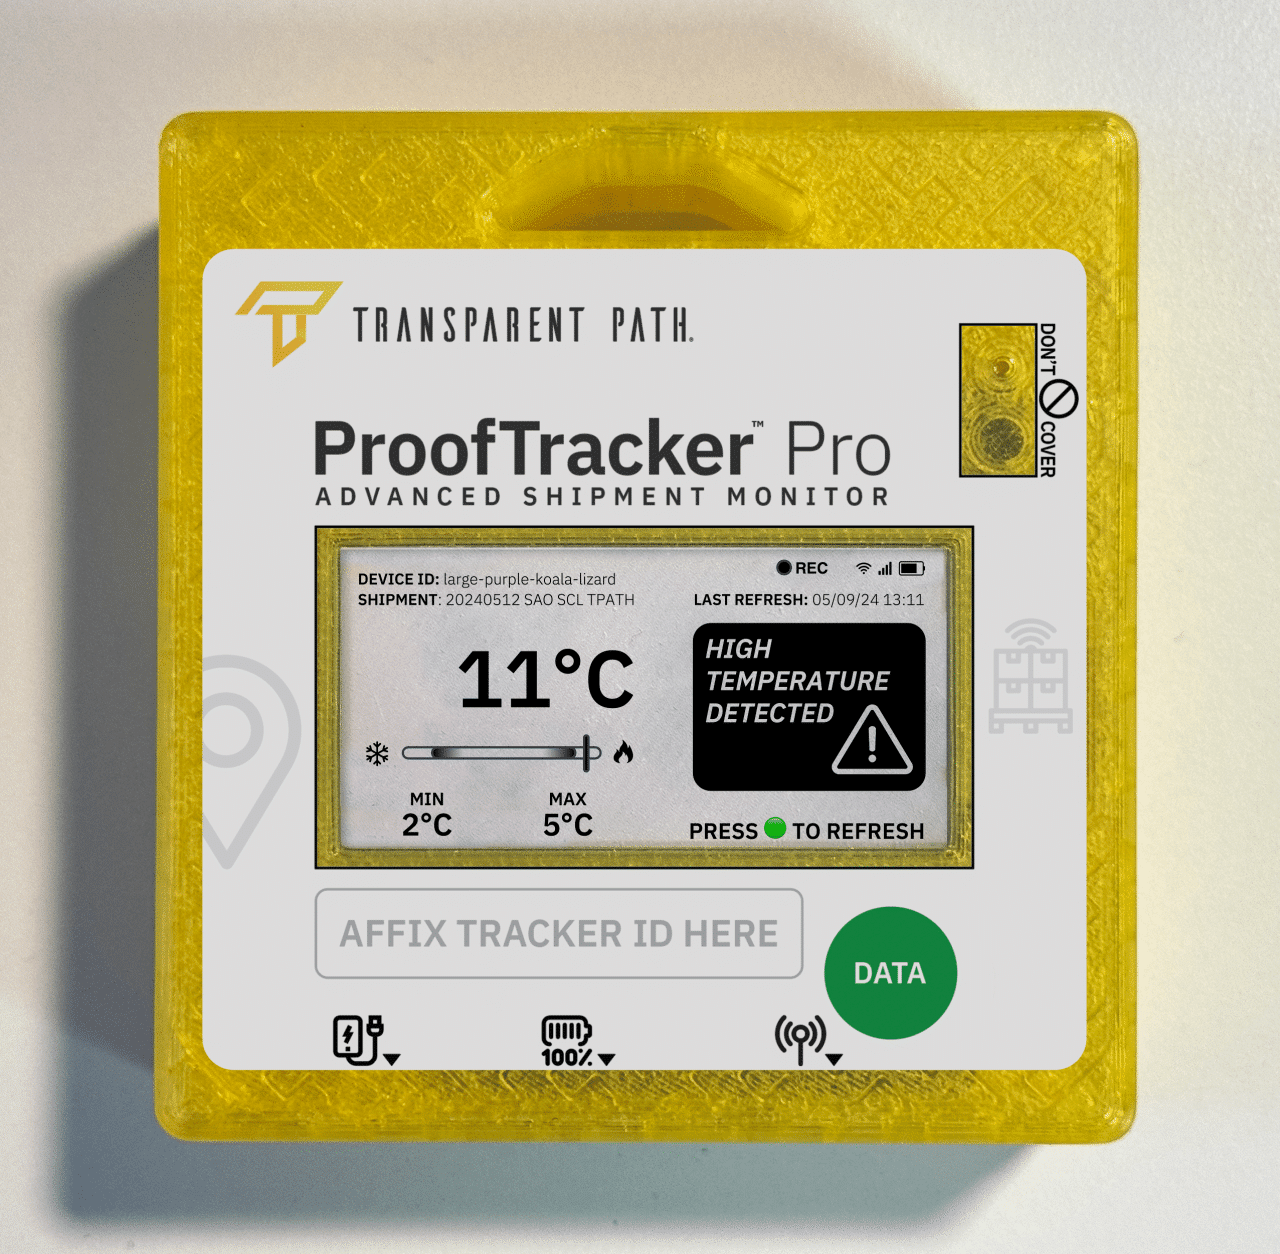 Transparent Path's ProofTracker™ Pro logistics tracking device